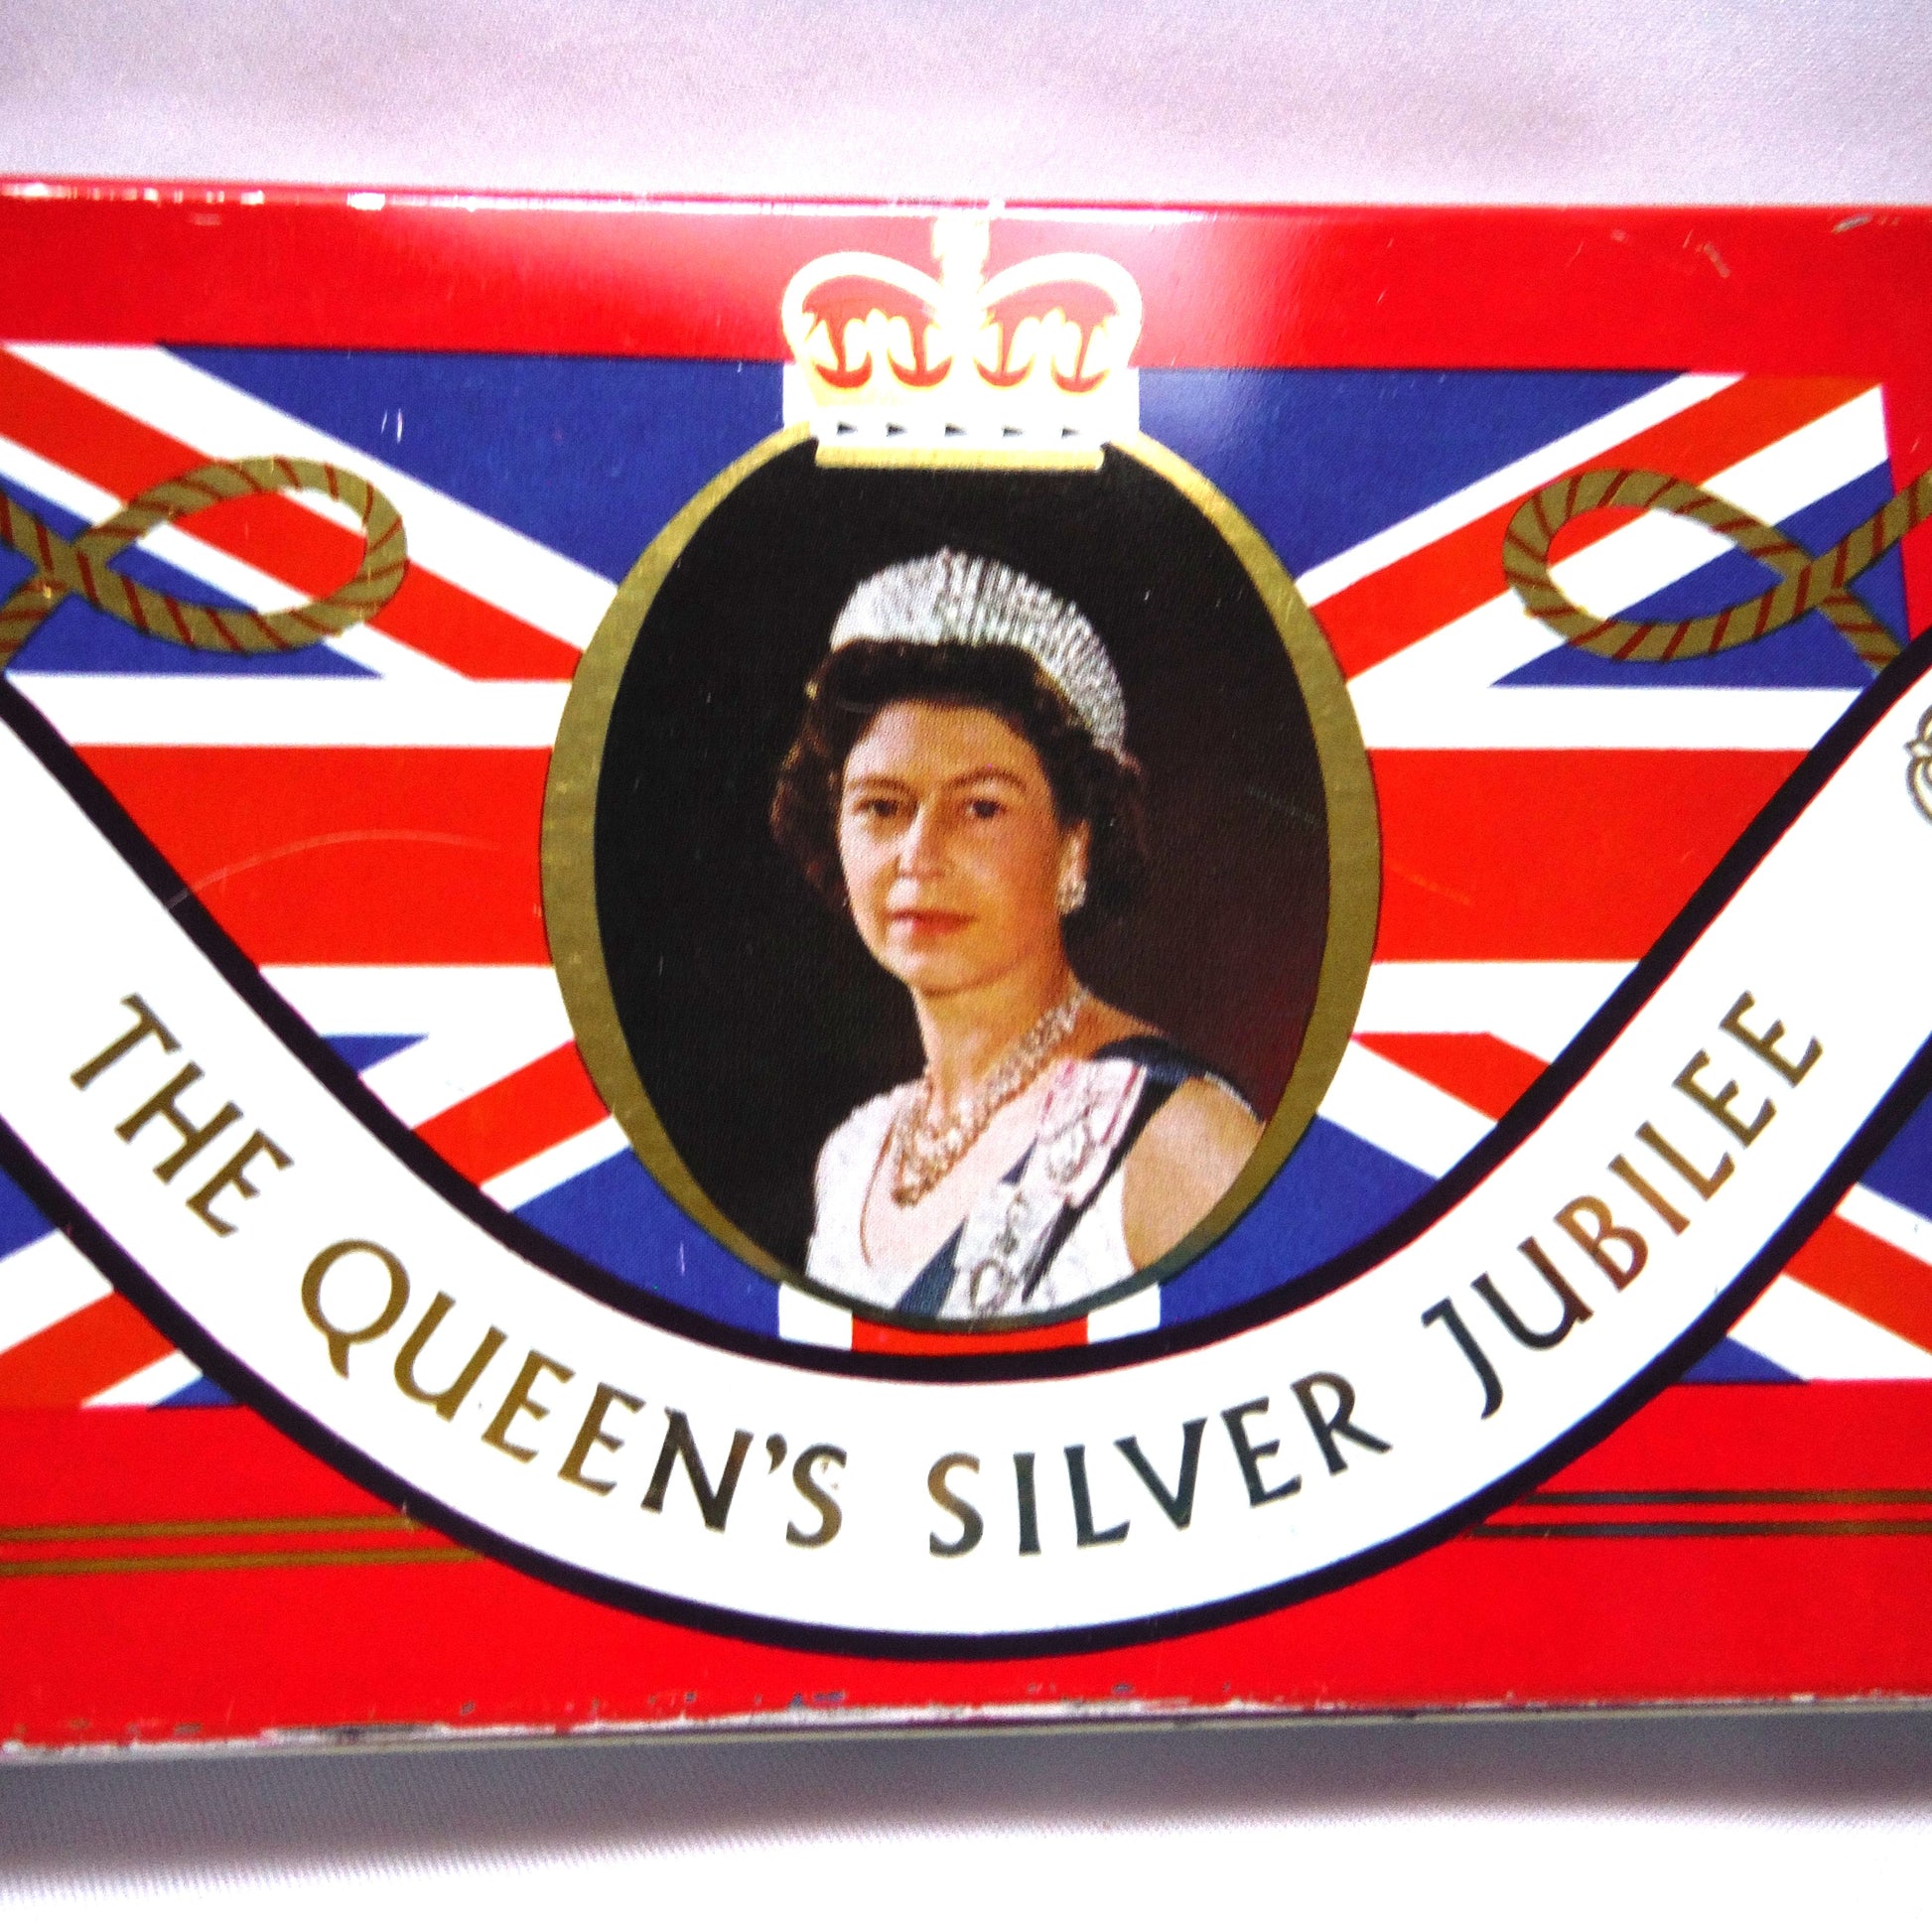 The Queen's Silver Jubilee